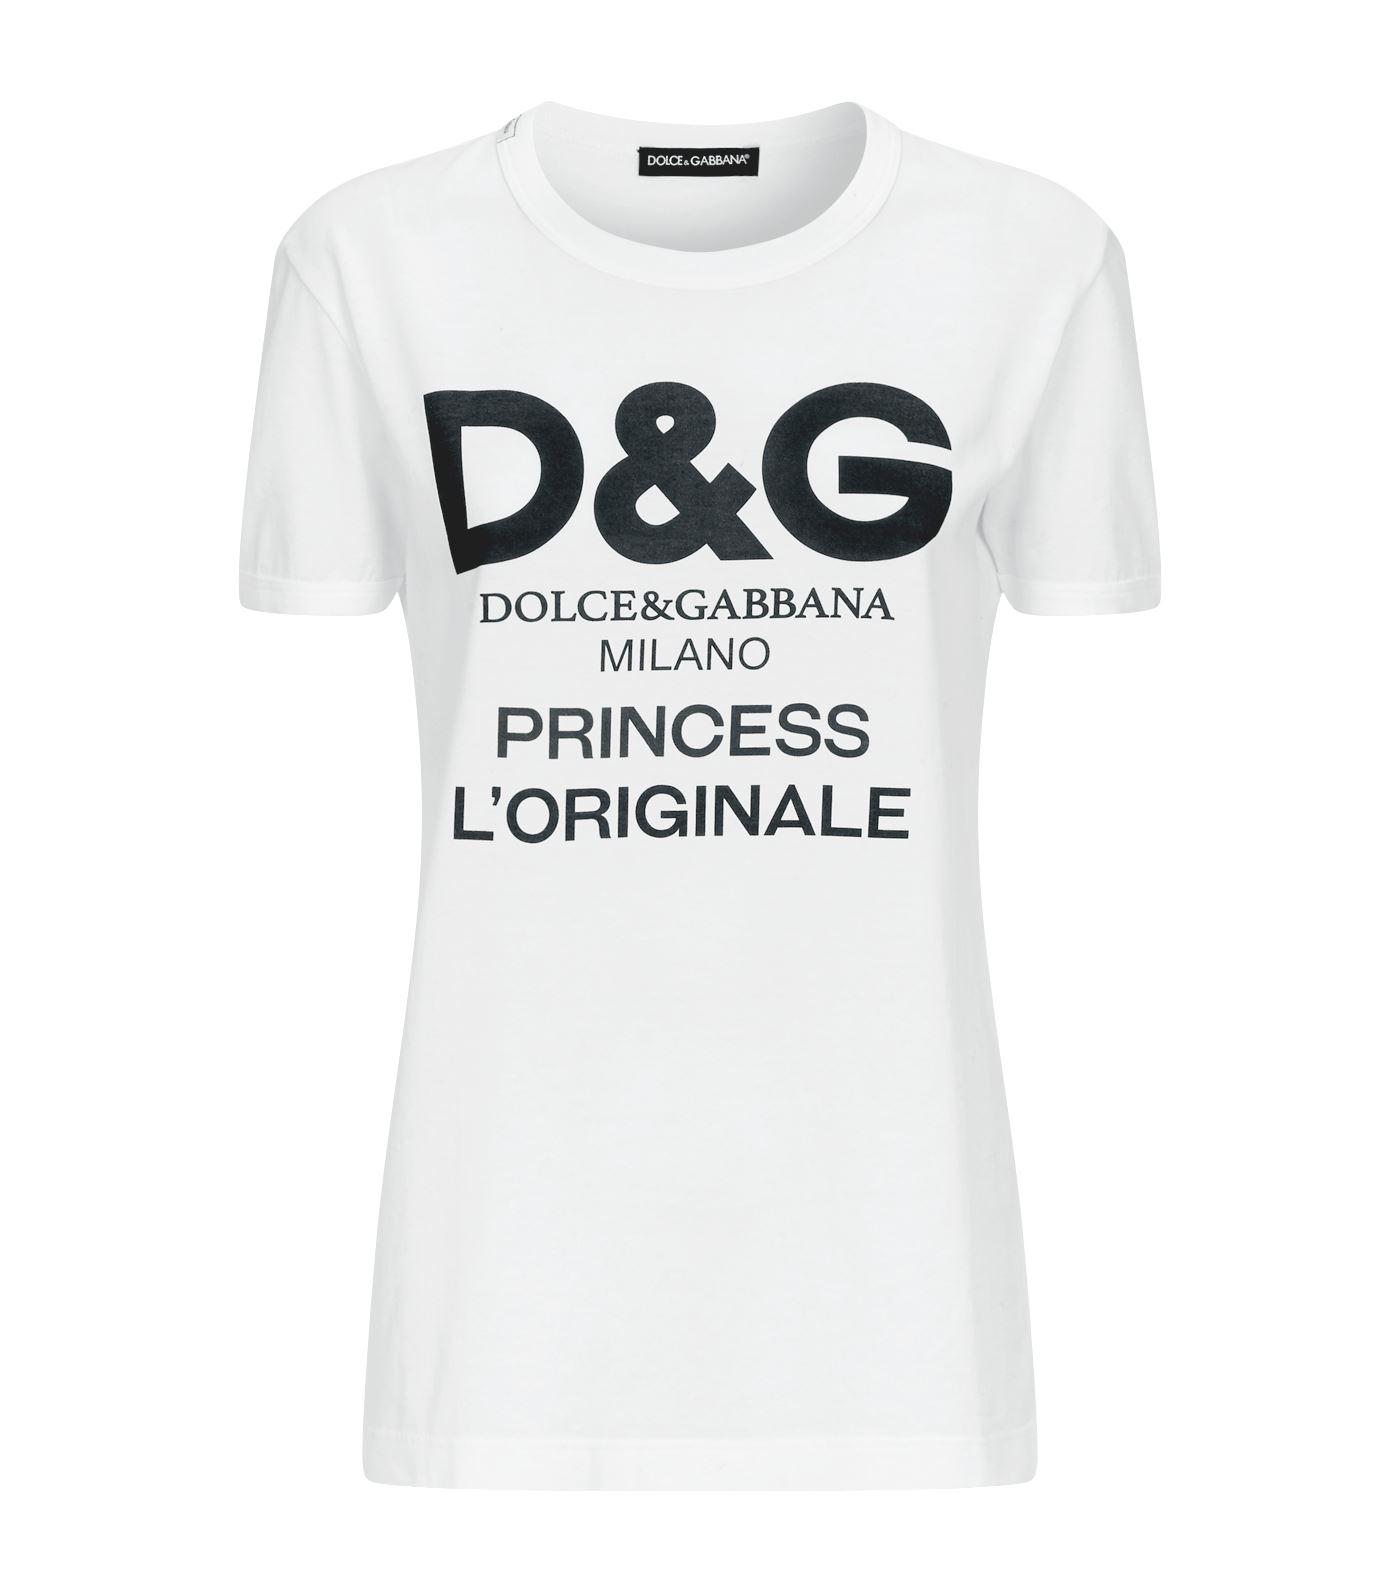 Dolce & Gabbana Princess L'originale T-shirt in White | Lyst